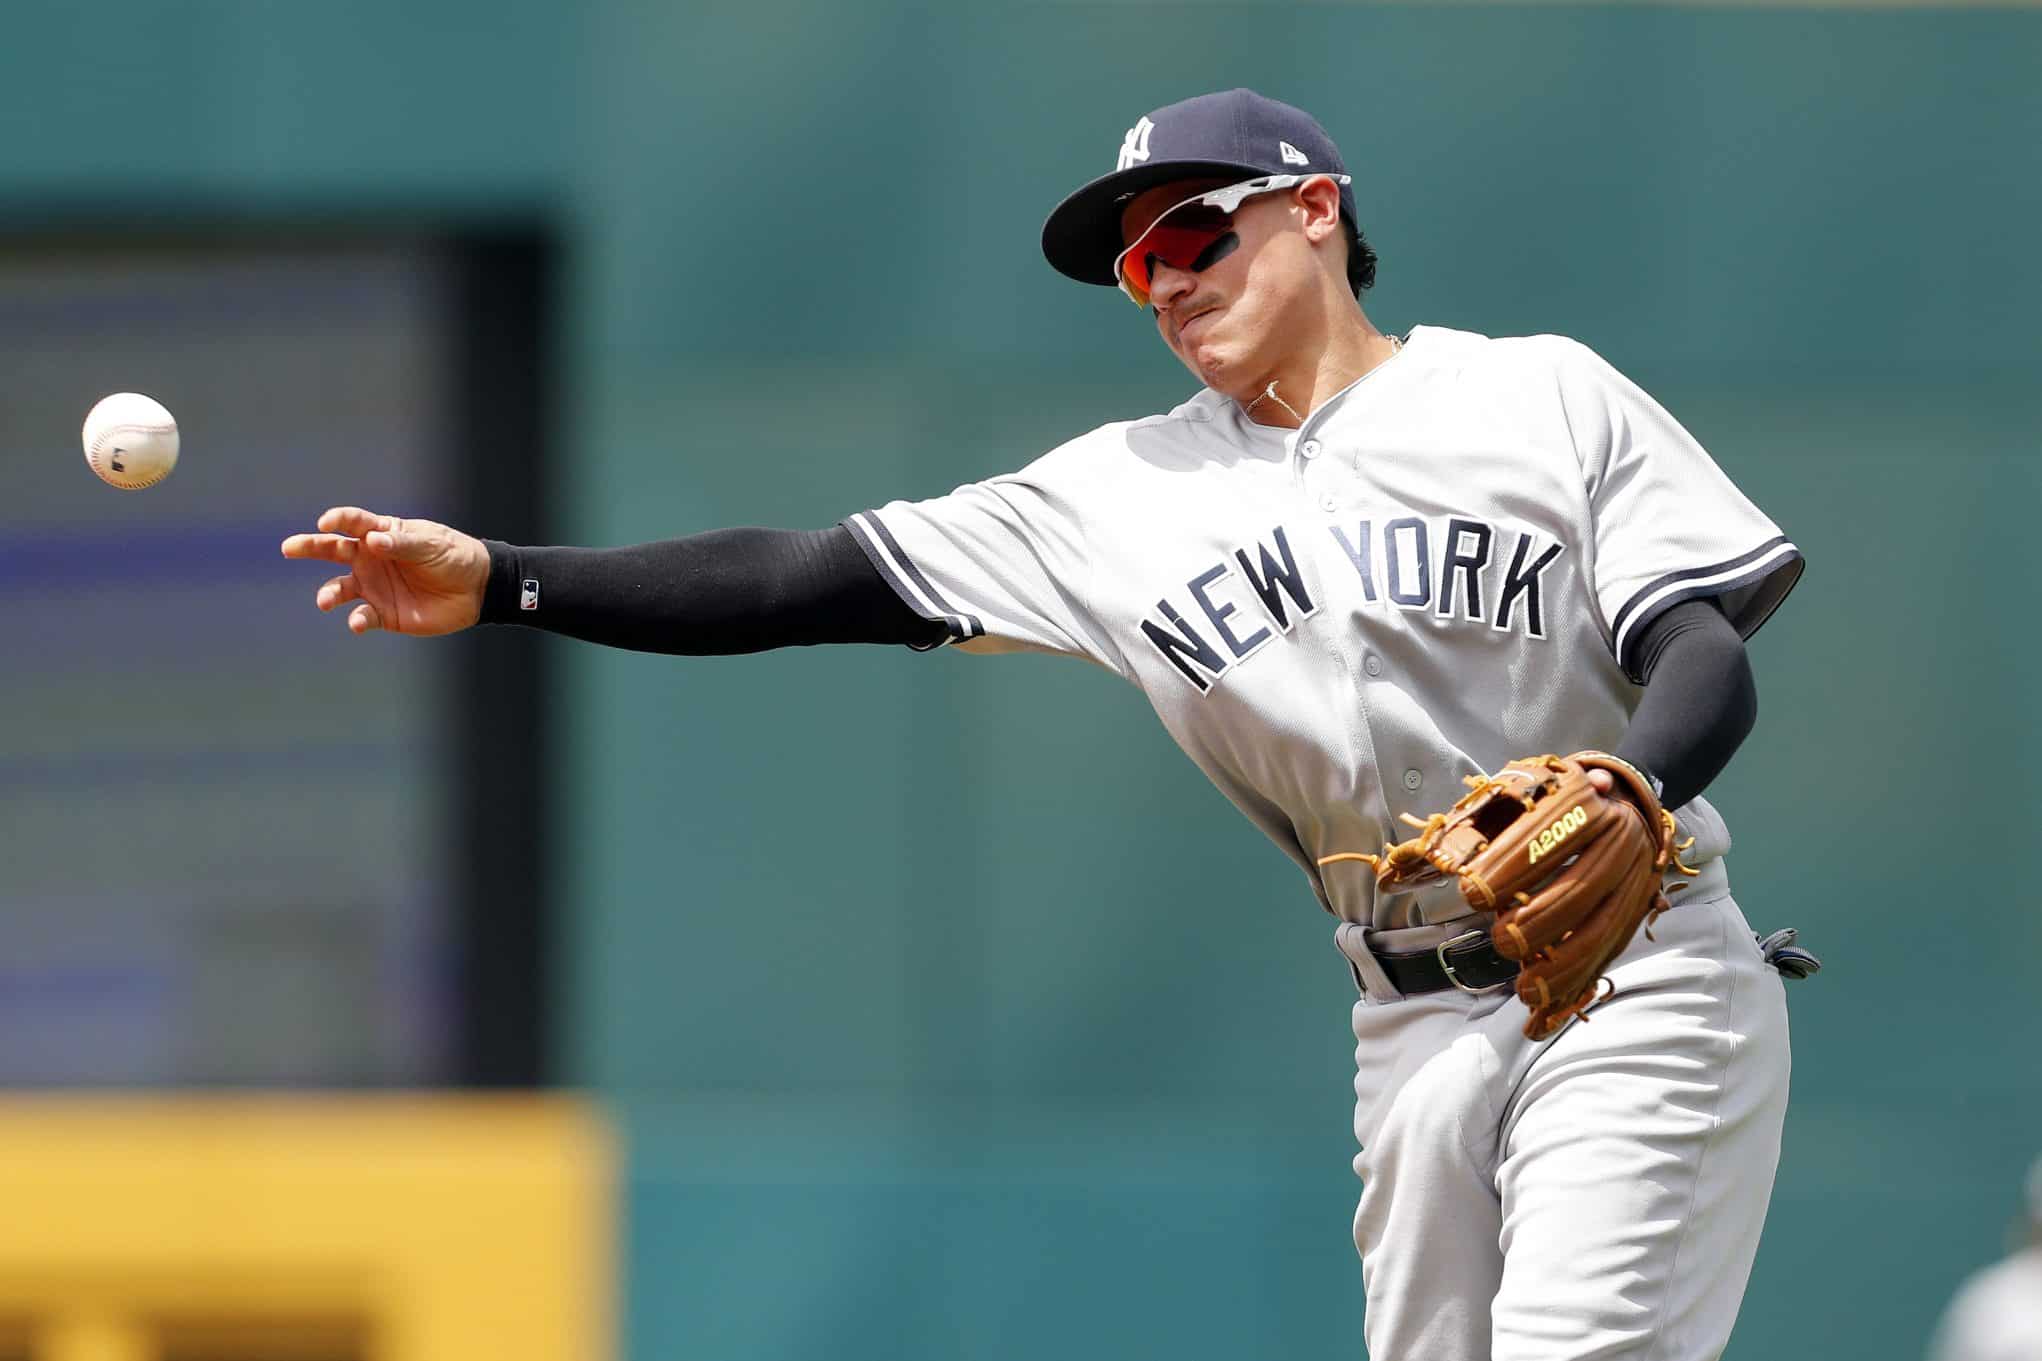 Ronald Torreyes New York Yankees